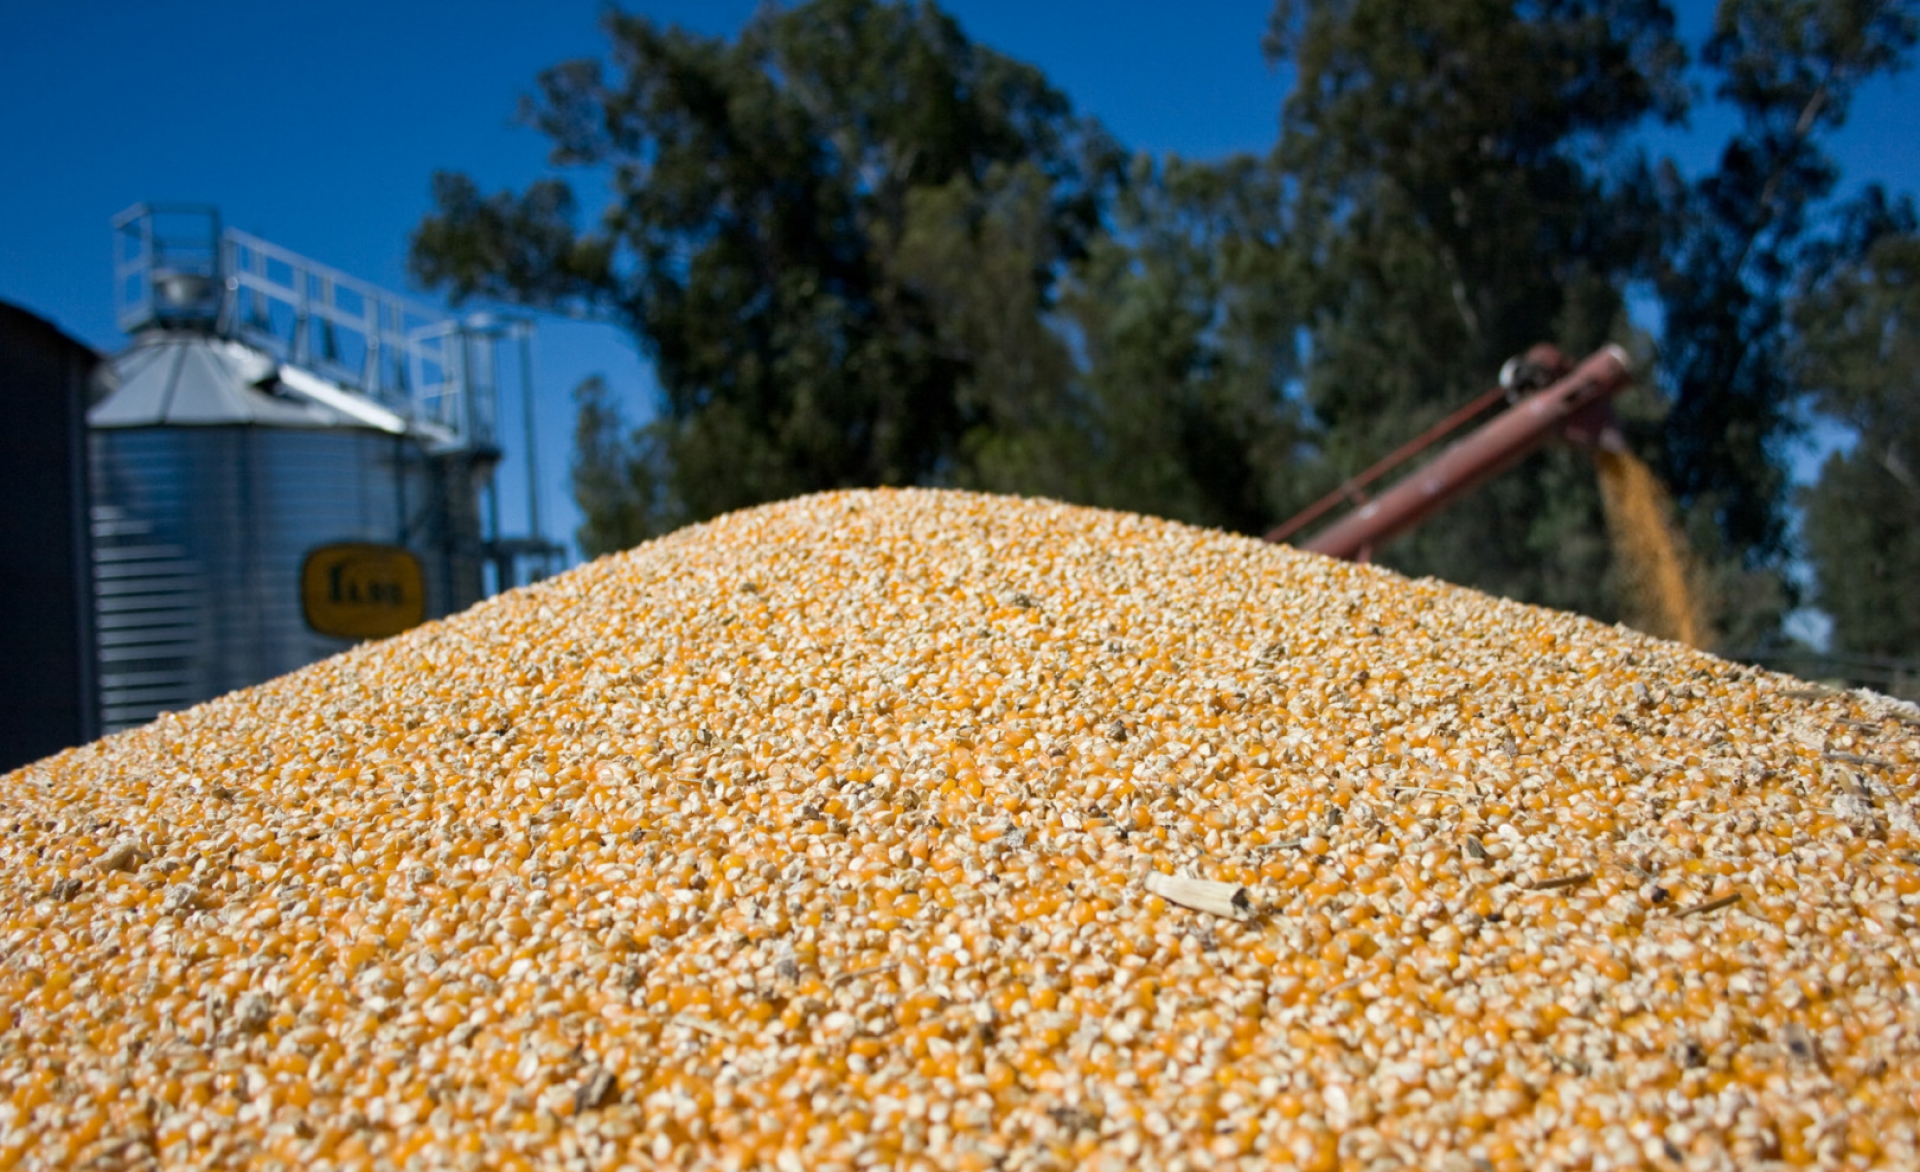 Argentina boasts record corn exports